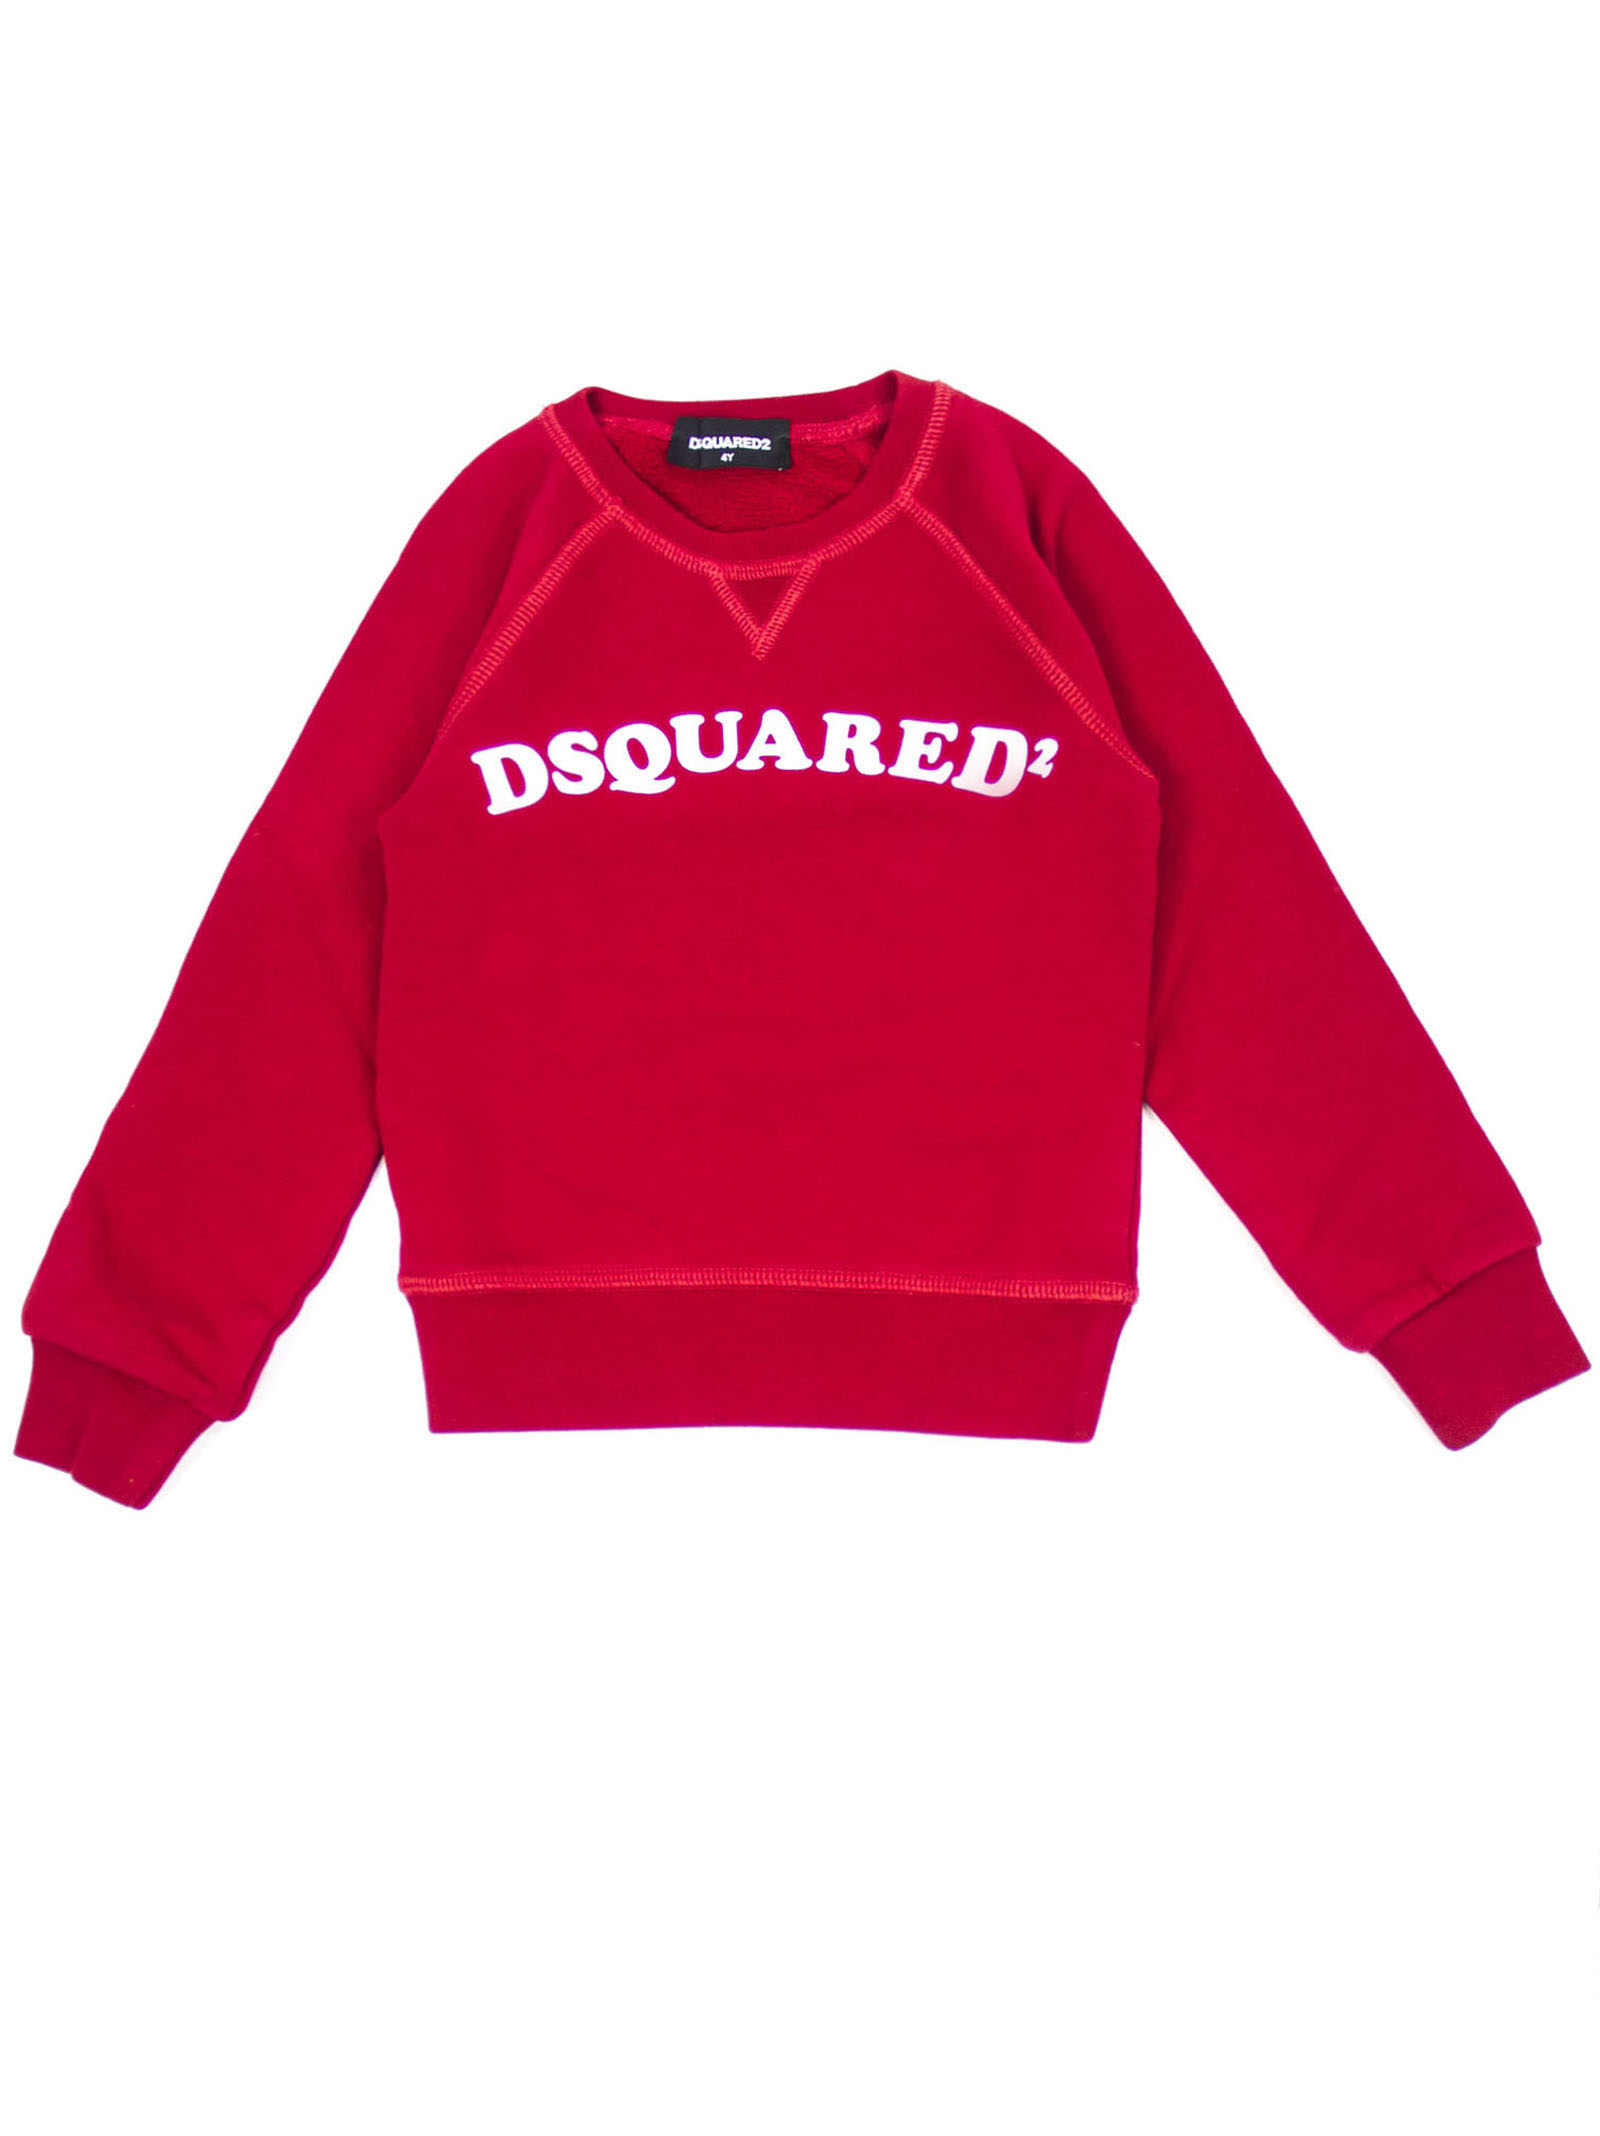 dsquared2 red sweatshirt